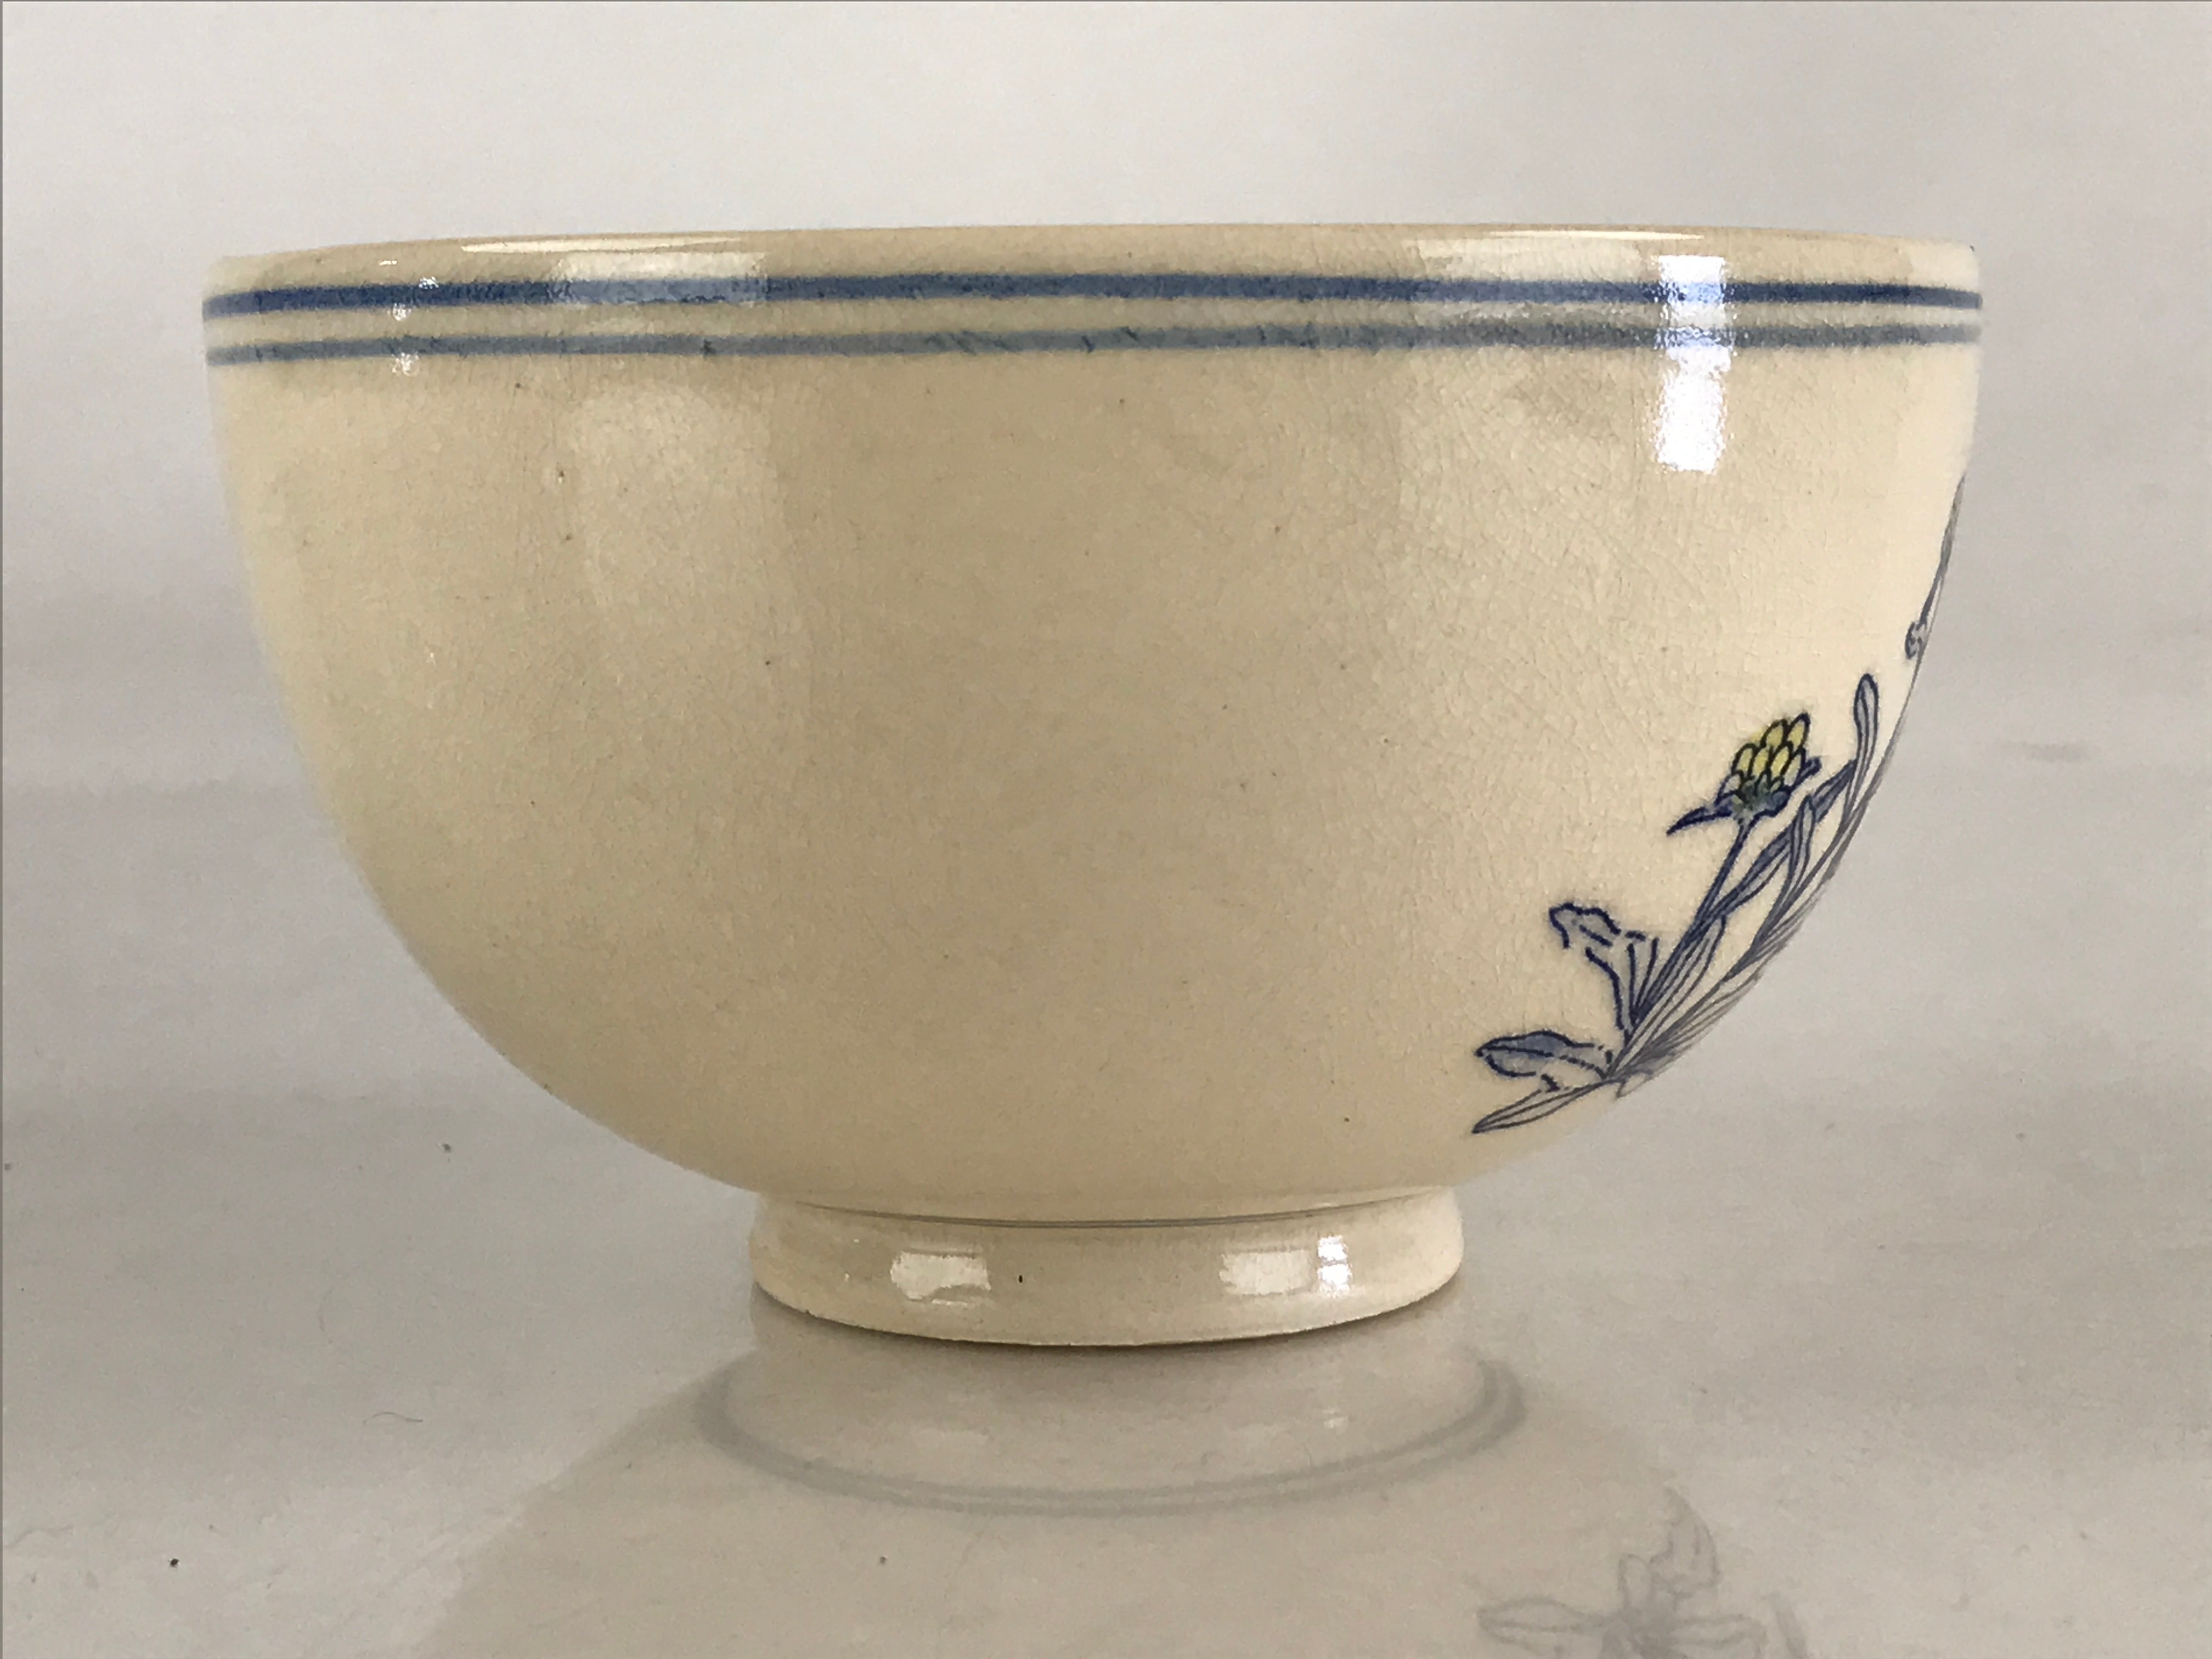 Ceramic Matcha Tea Bowl, traditional tea ceremony Tea Cup